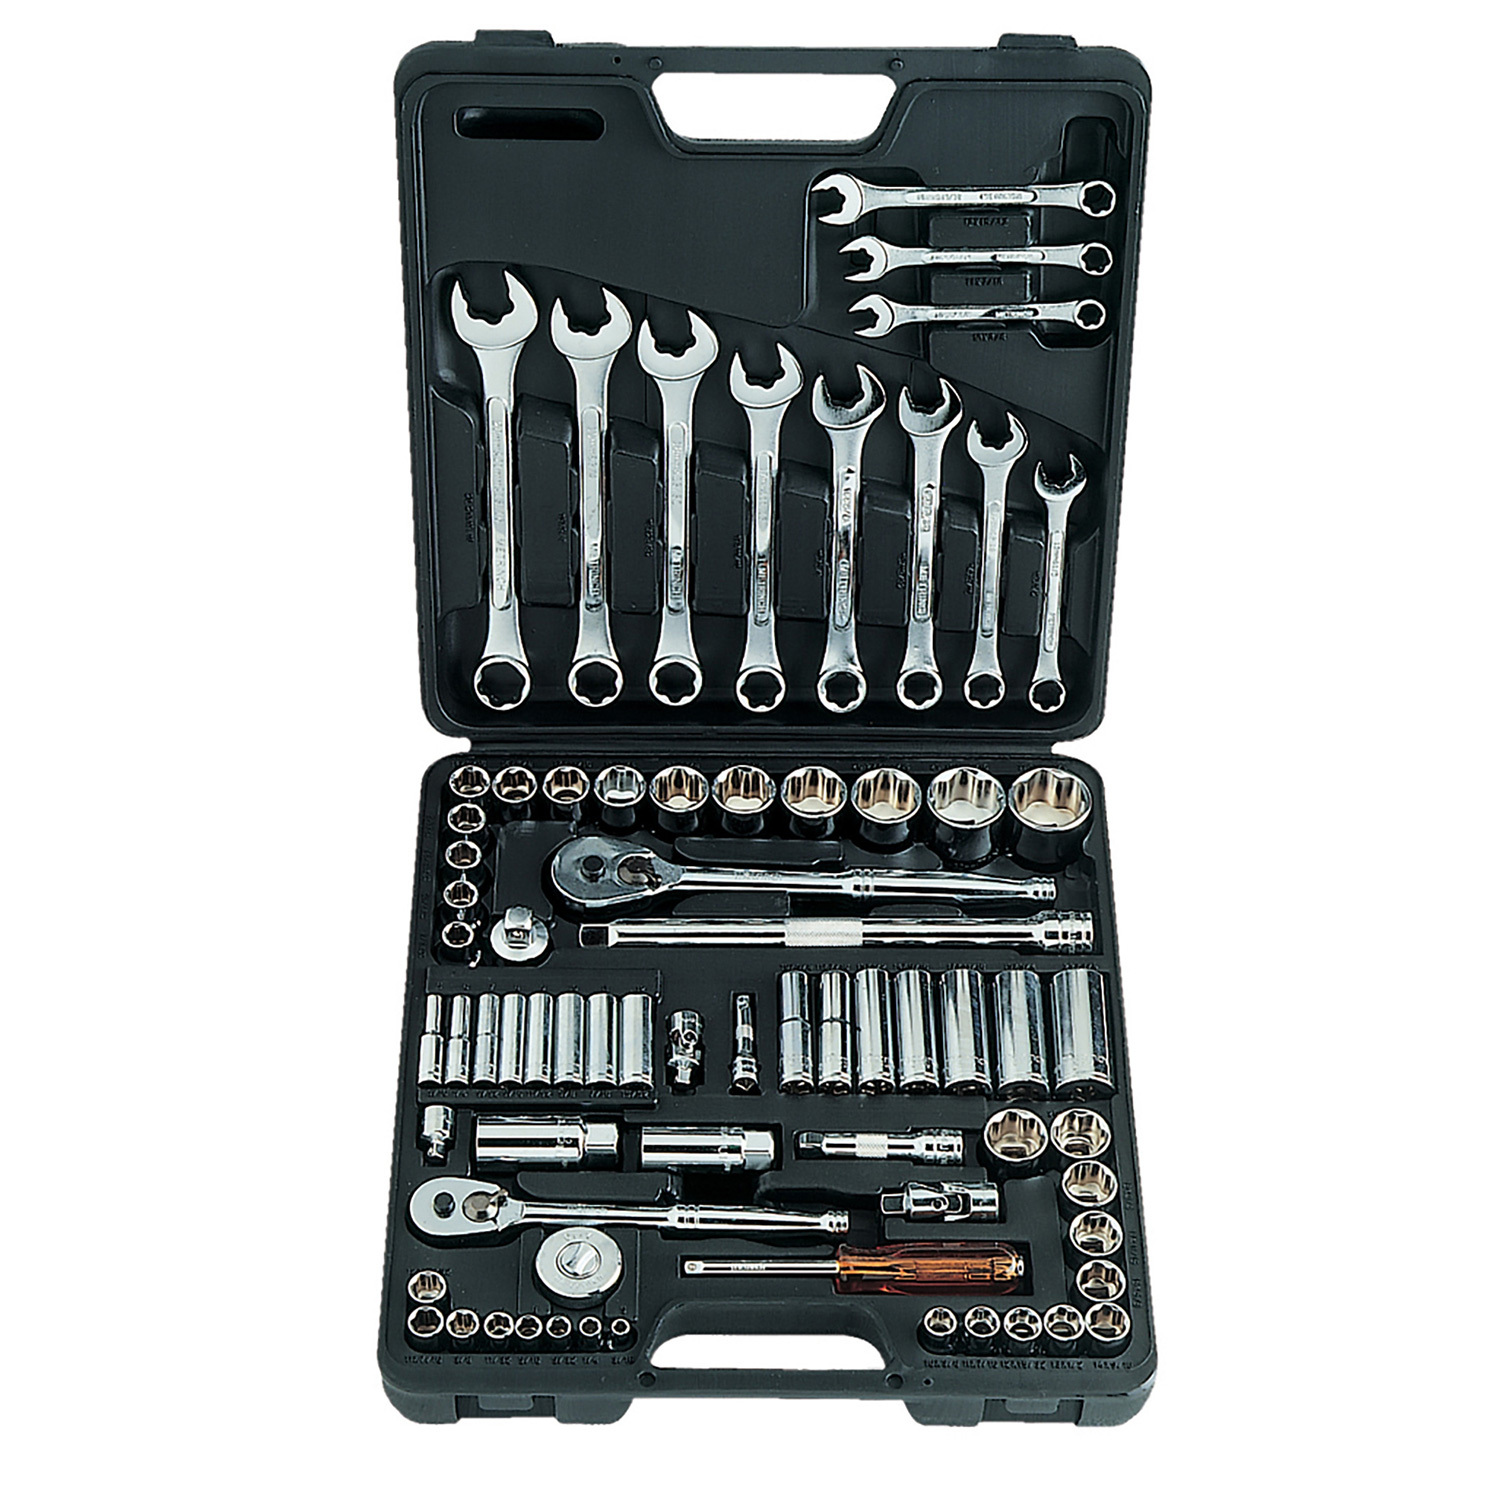 Zroof Tool Kit for Home Use Spanner Set Socket Set Wrench Kit